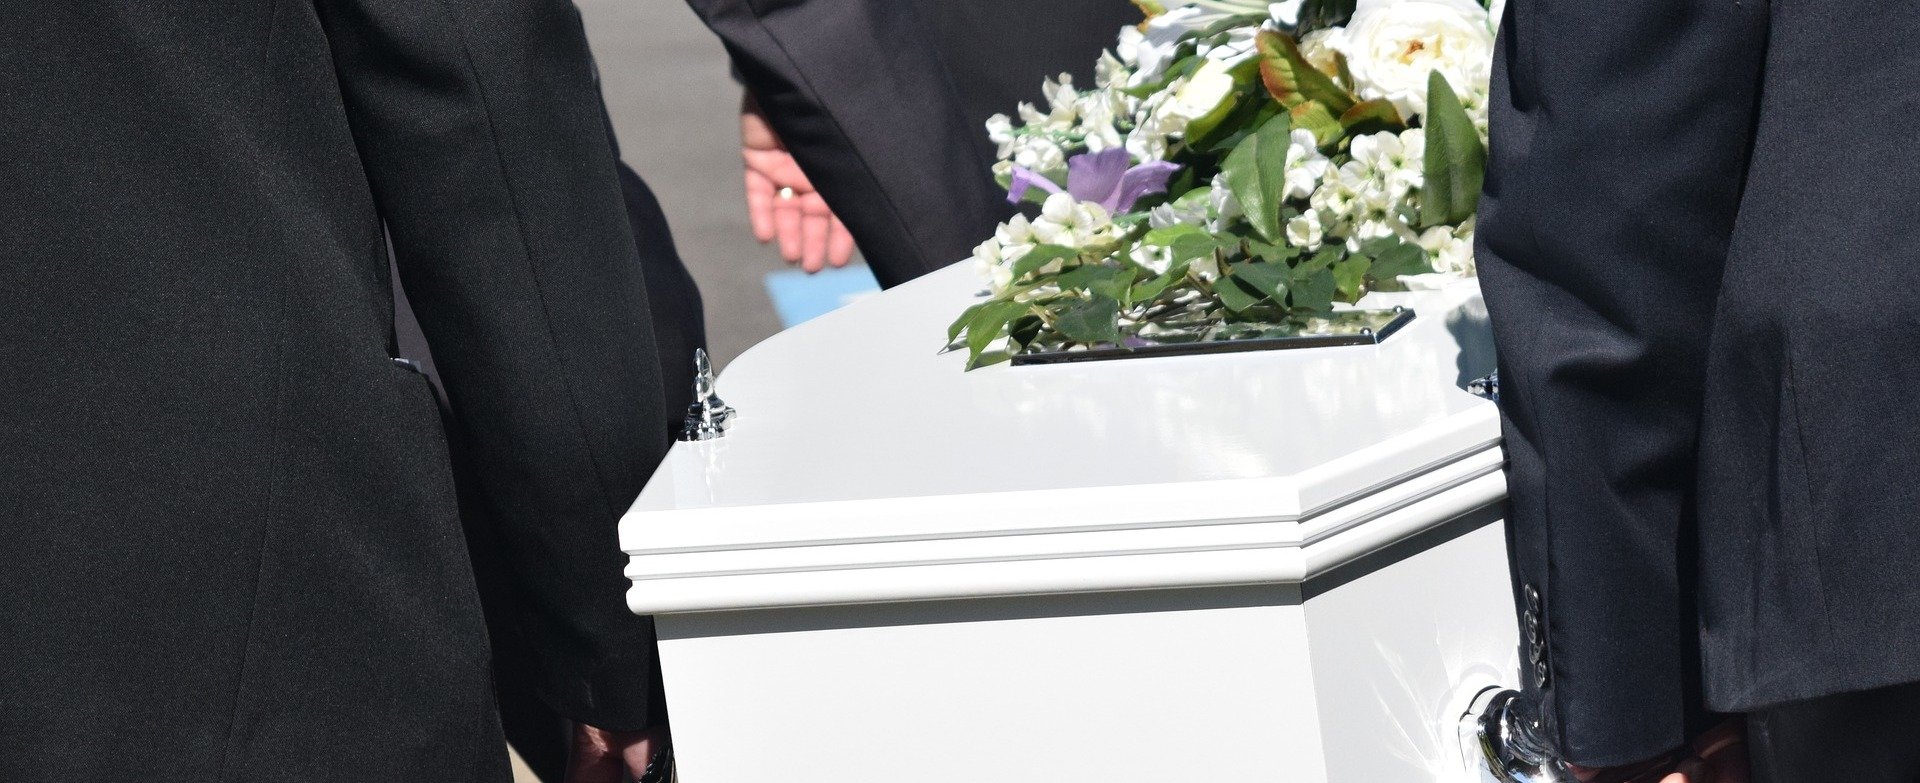 Death & Funerals Guide